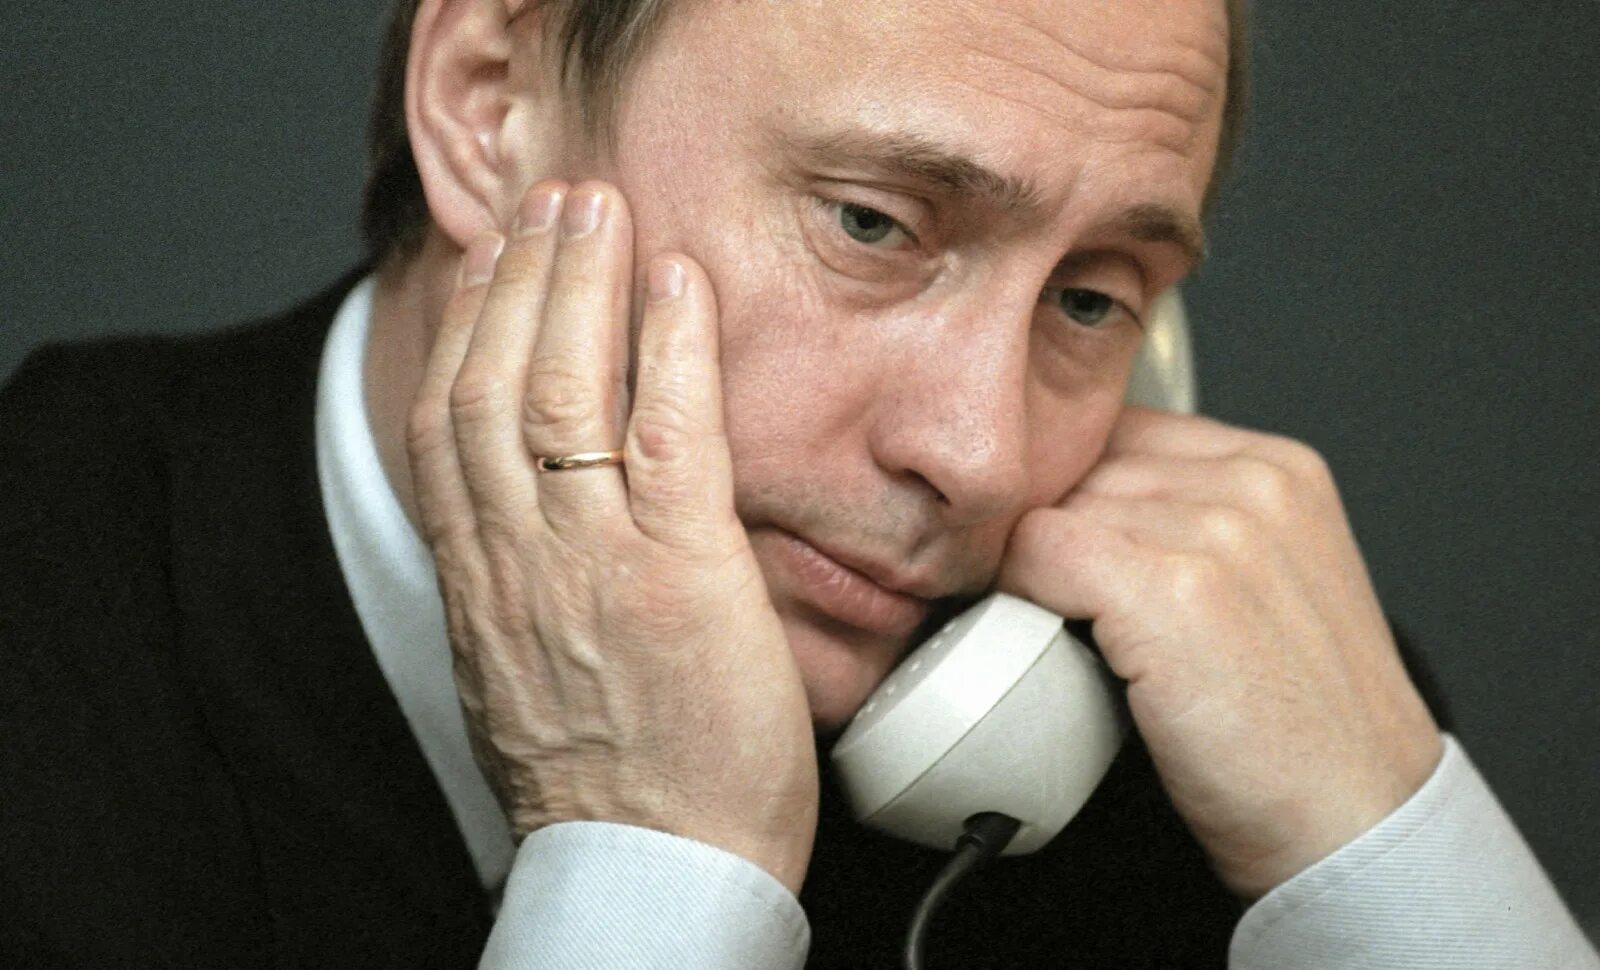 Лица президента. Ногти Путина. Руки президента. Руки Путина маникюр. Ладонь Путина.